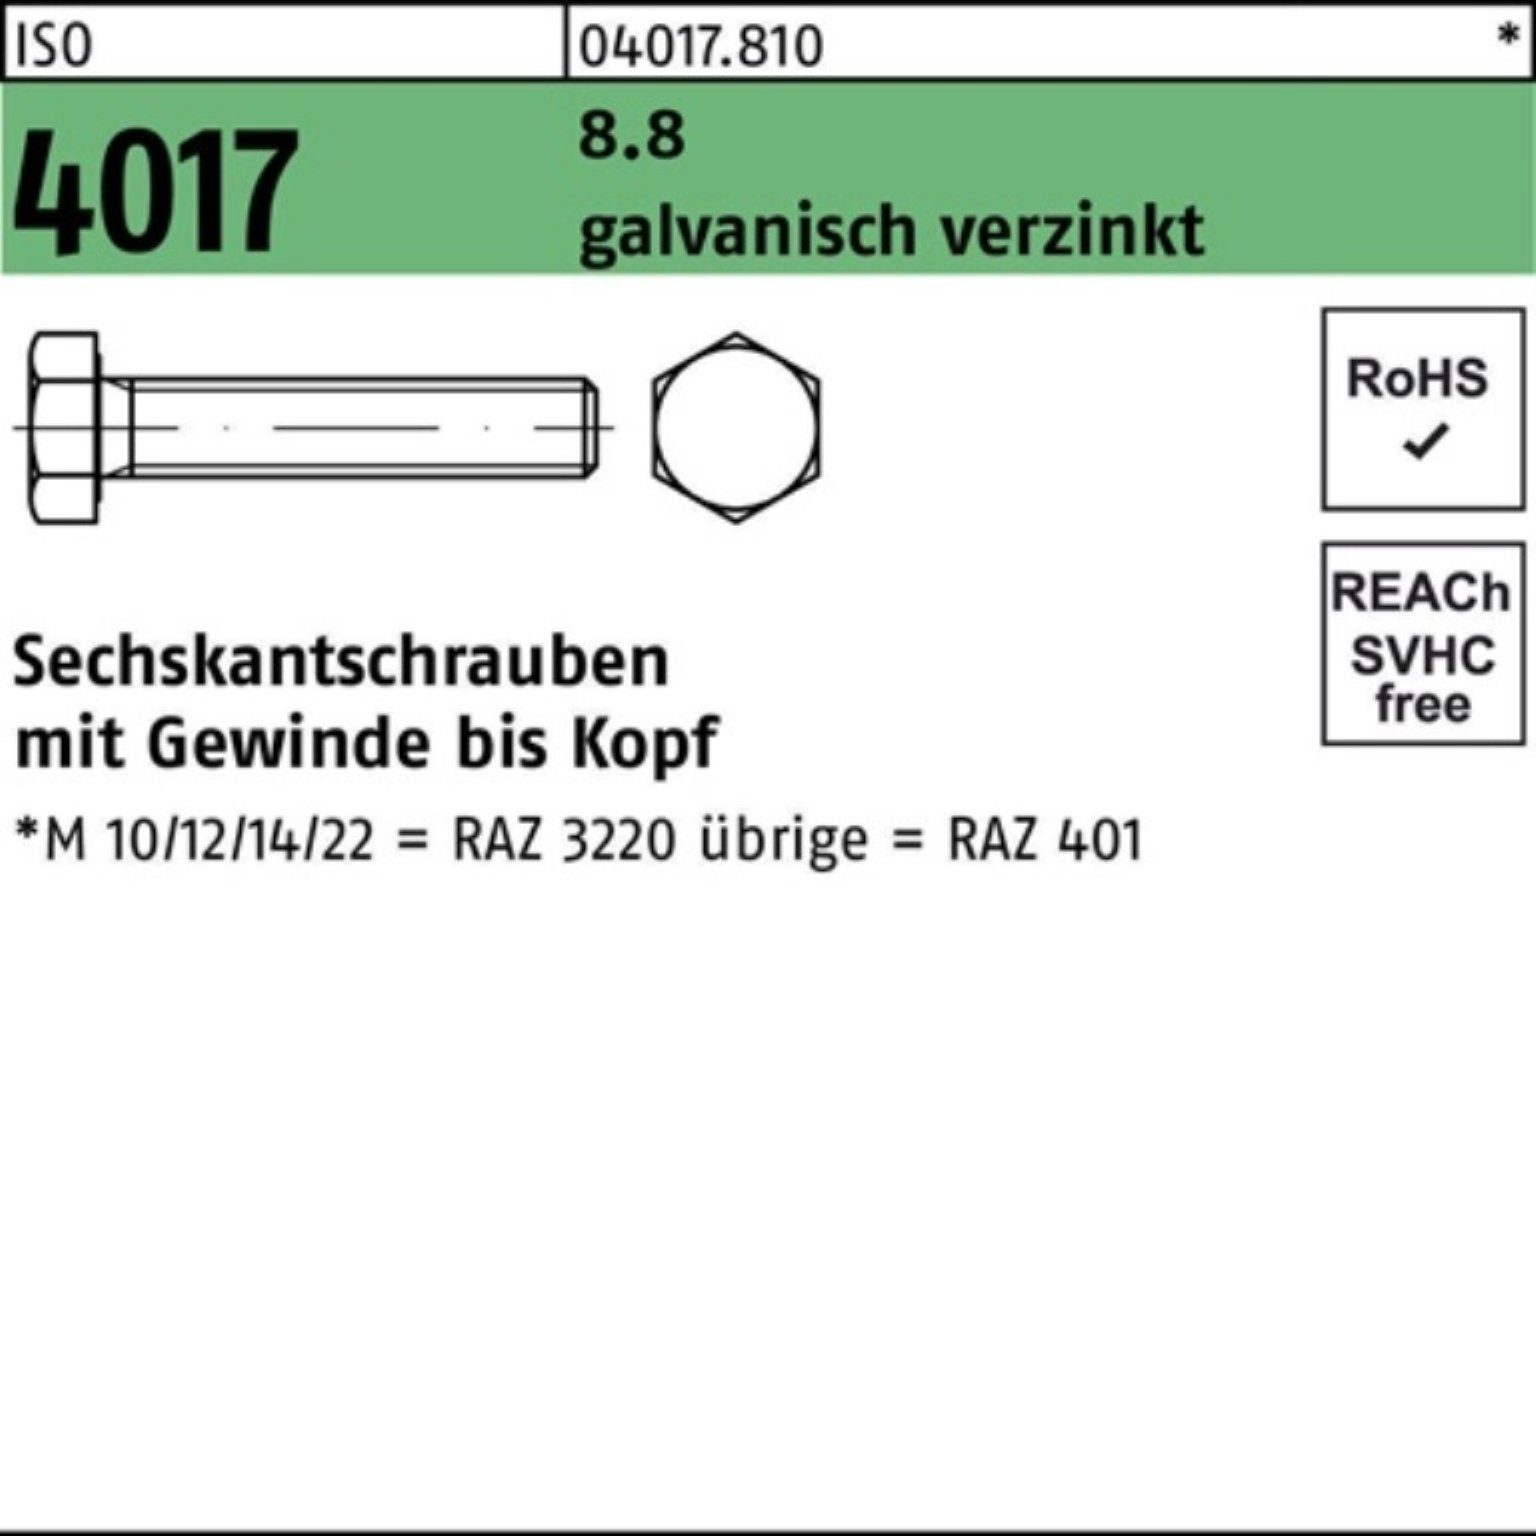 Bufab Sechskantschraube 100er Pack St 1 galv.verz. M36x 4017 ISO VG 8.8 120 Sechskantschraube